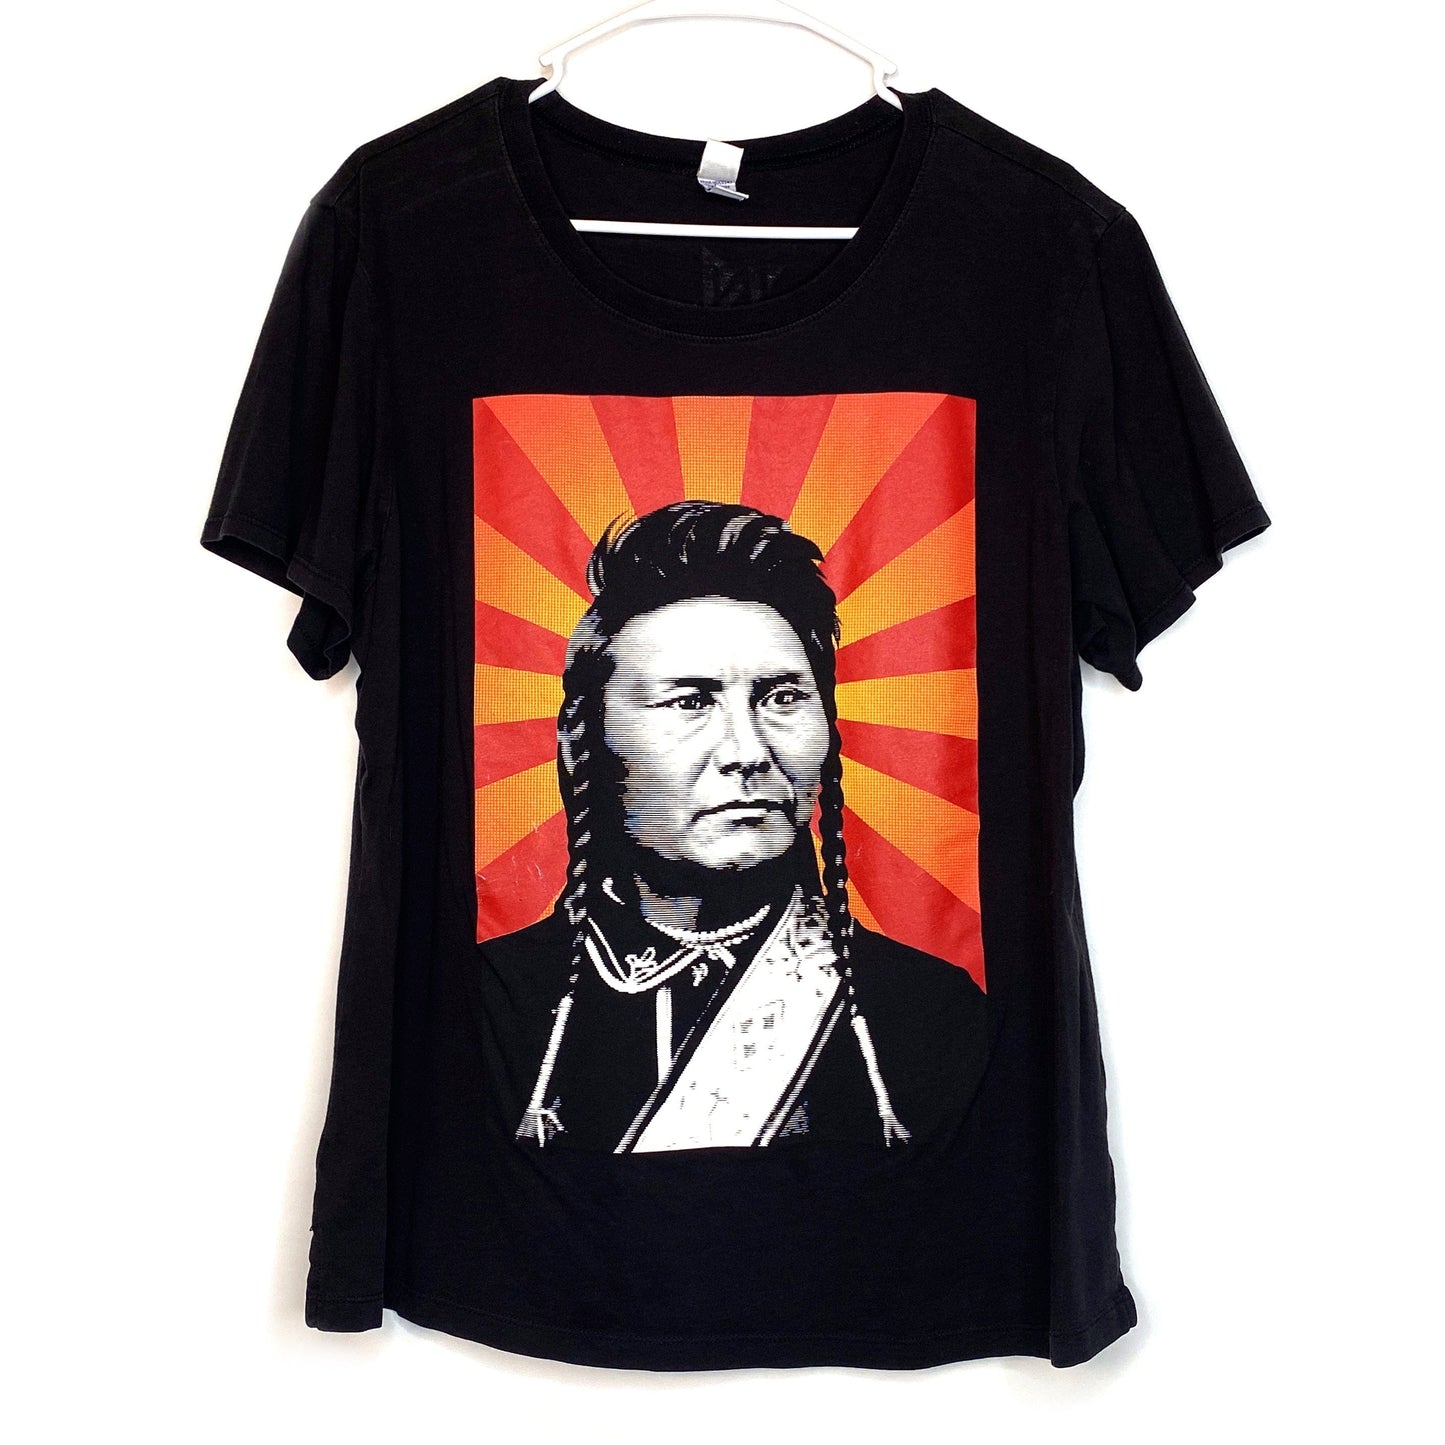 Kavio Womens Size XL Black T-Shirt Native American Indian S/s